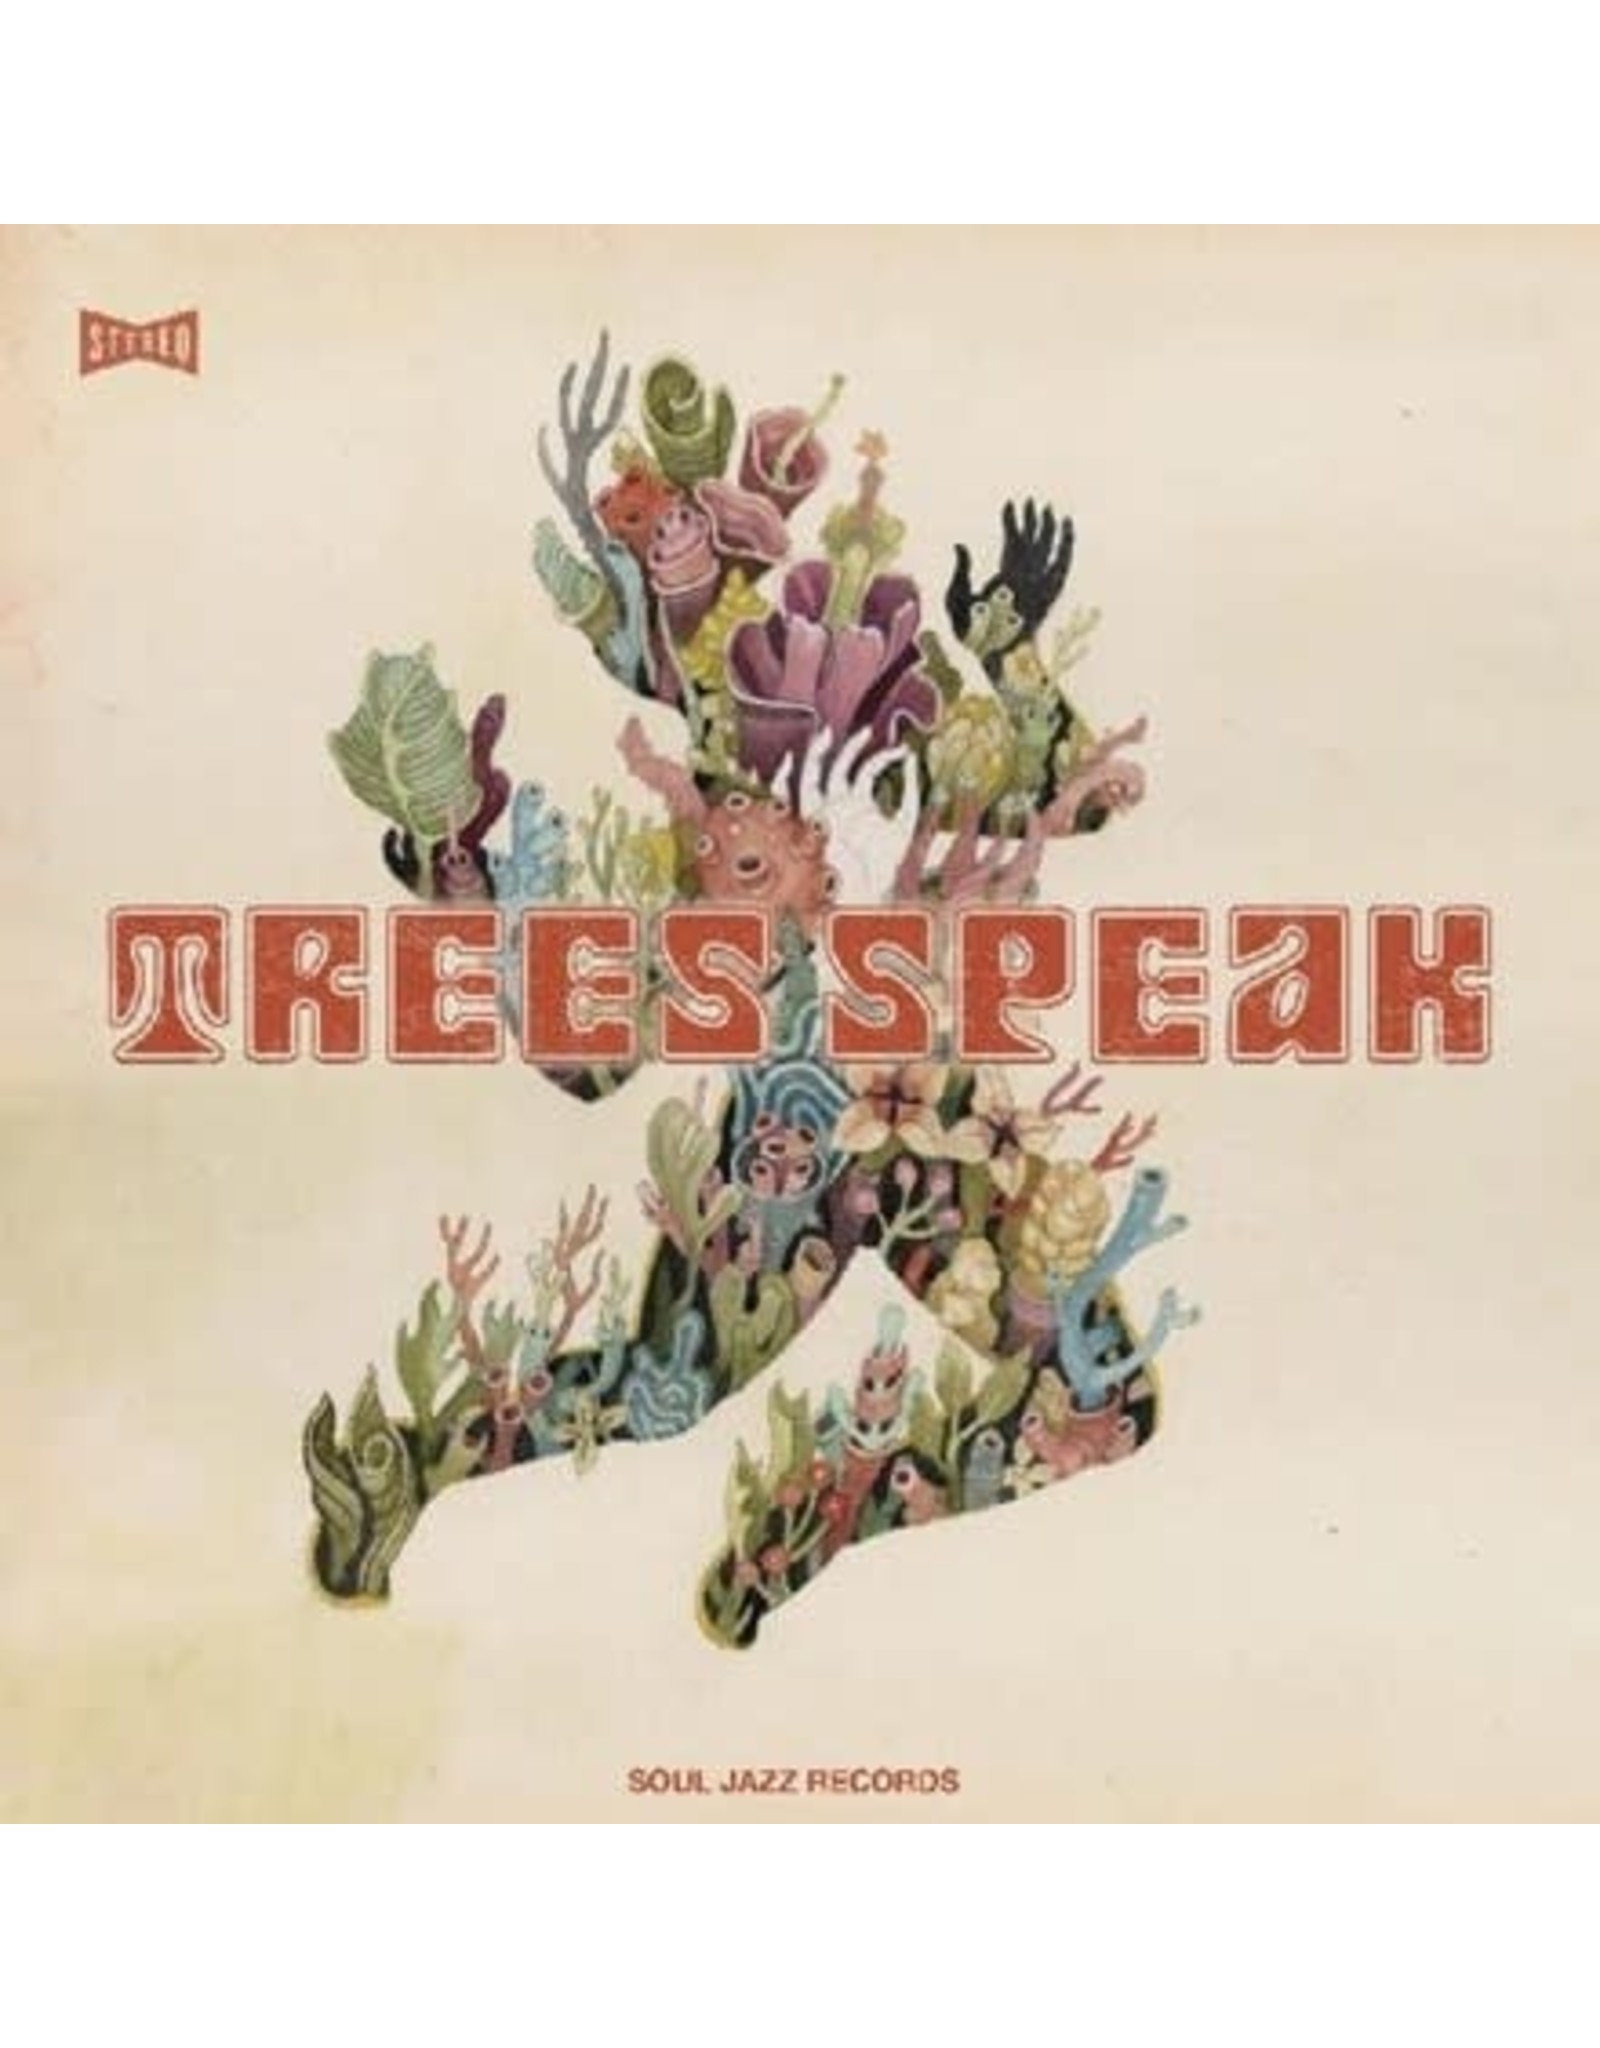 Soul Jazz Trees Speak: Shadow Forms LP